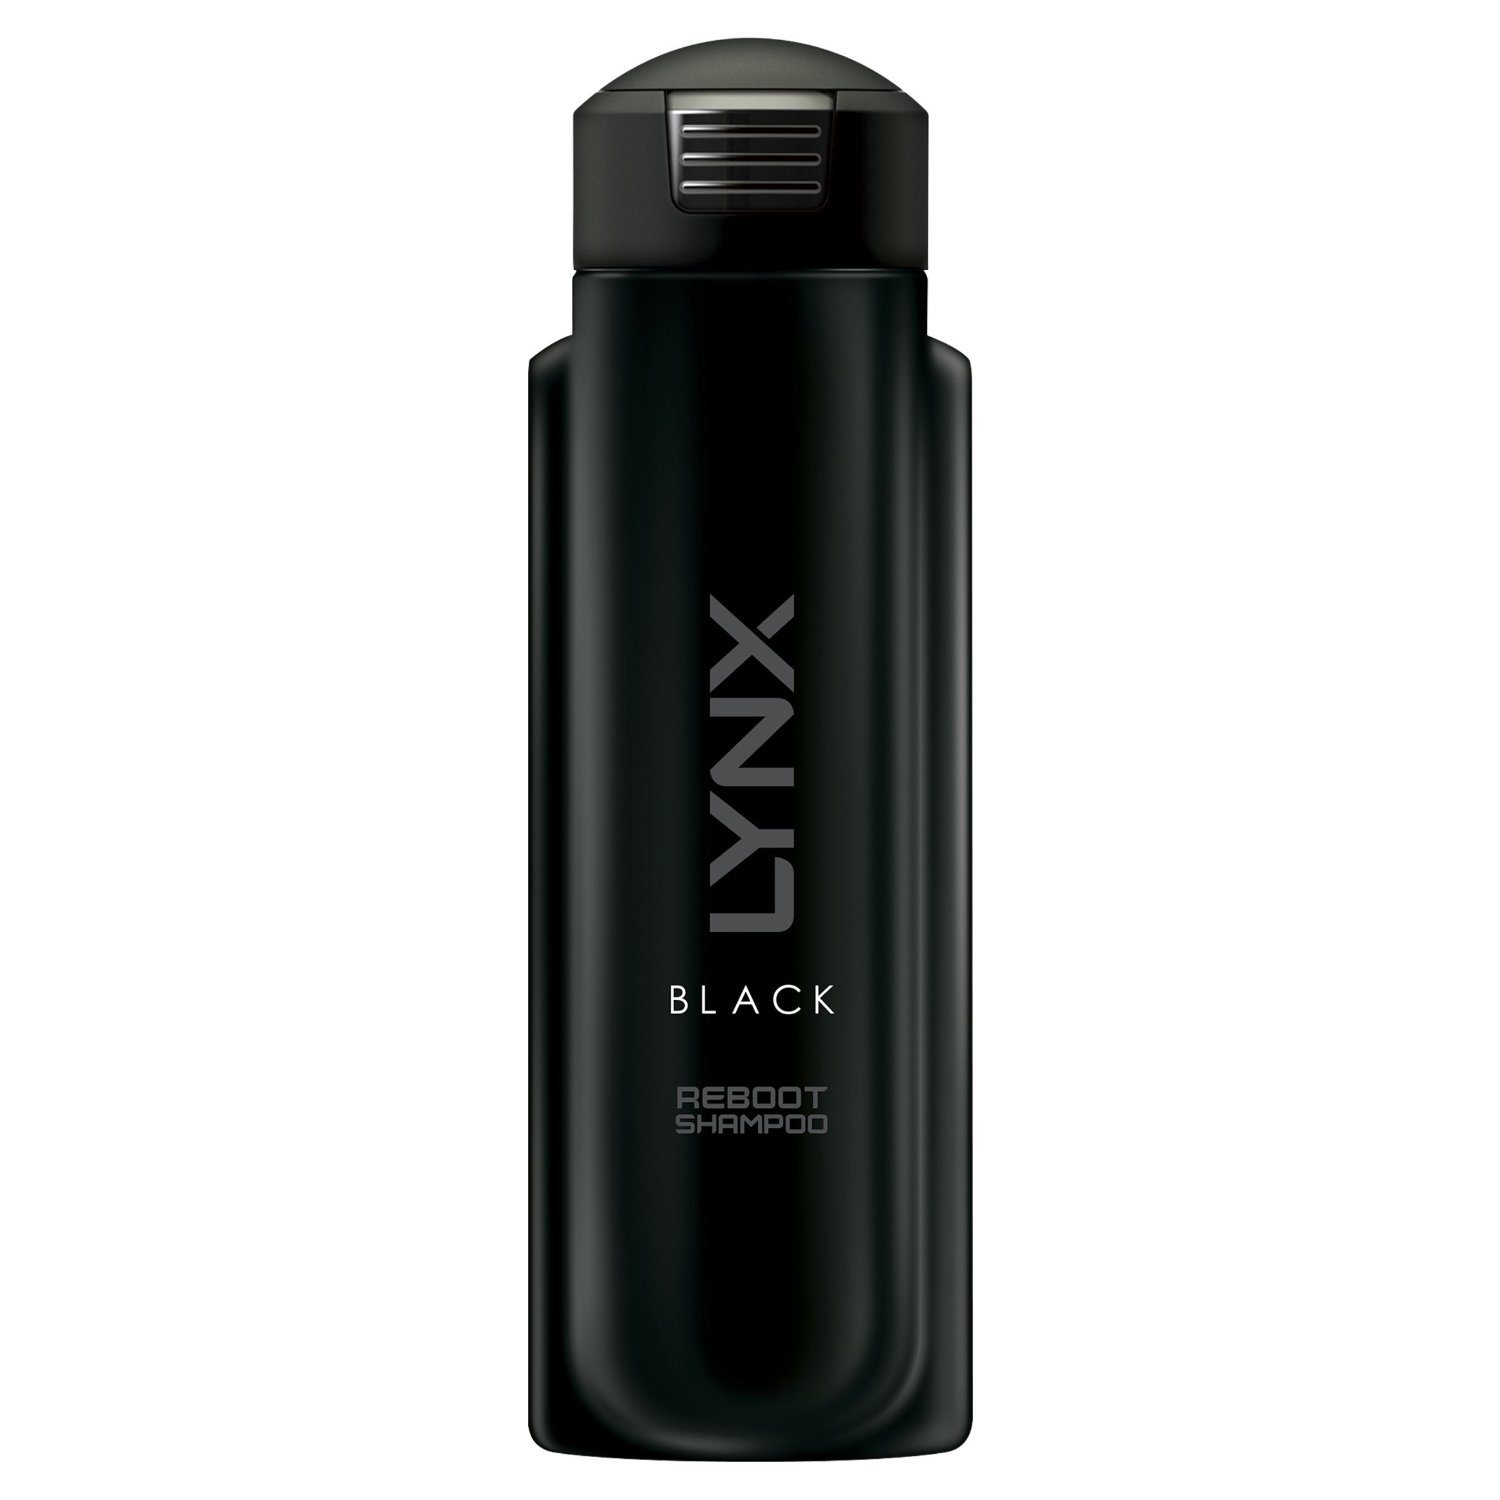 Lynx - Black, champú, 300 ml, pack de 3